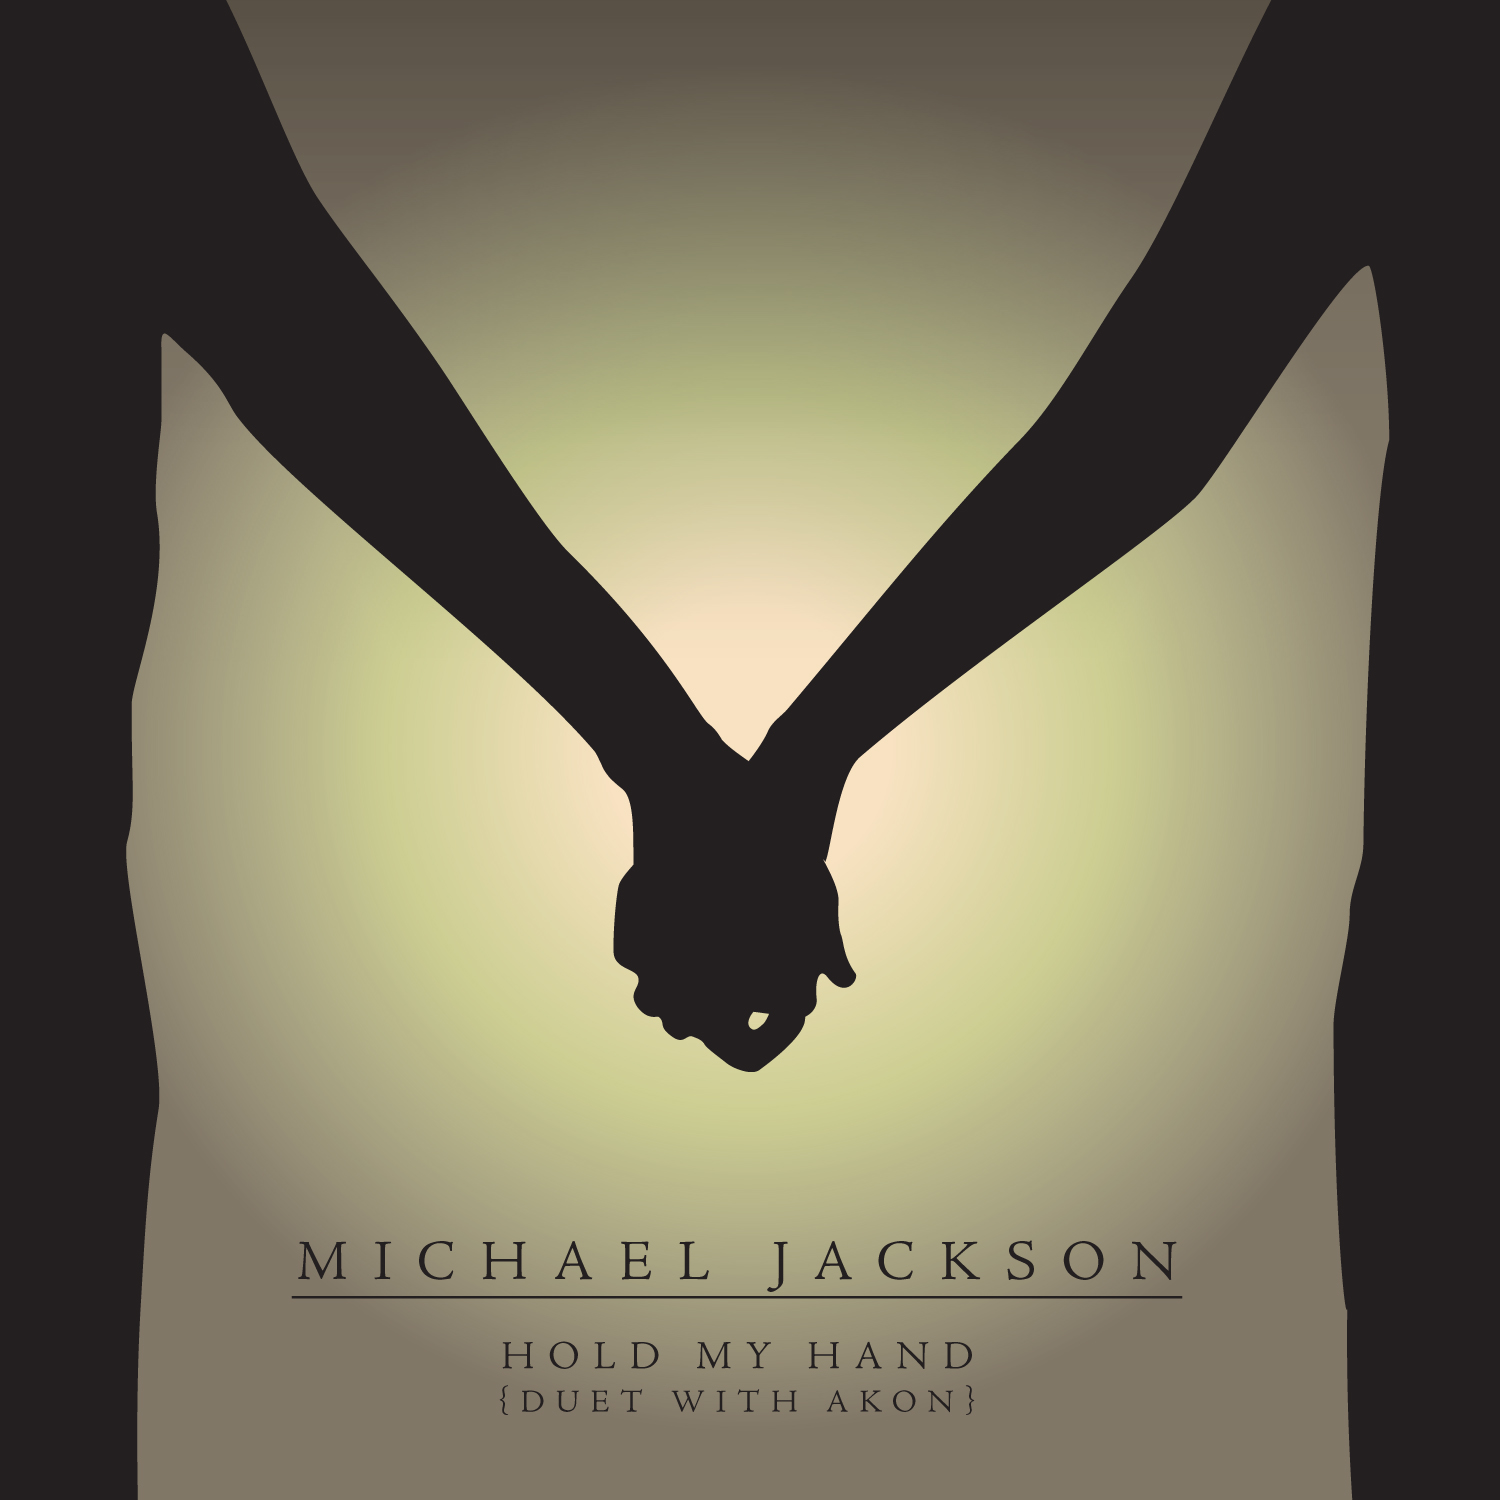 http://3.bp.blogspot.com/_HvUEw7-SVa0/TQ3mWnMpQxI/AAAAAAAAAIA/JgvmW6fpwnE/s1600/Michael_Jackson_Hold_My_Hand_Duet_With_Akon.jpg